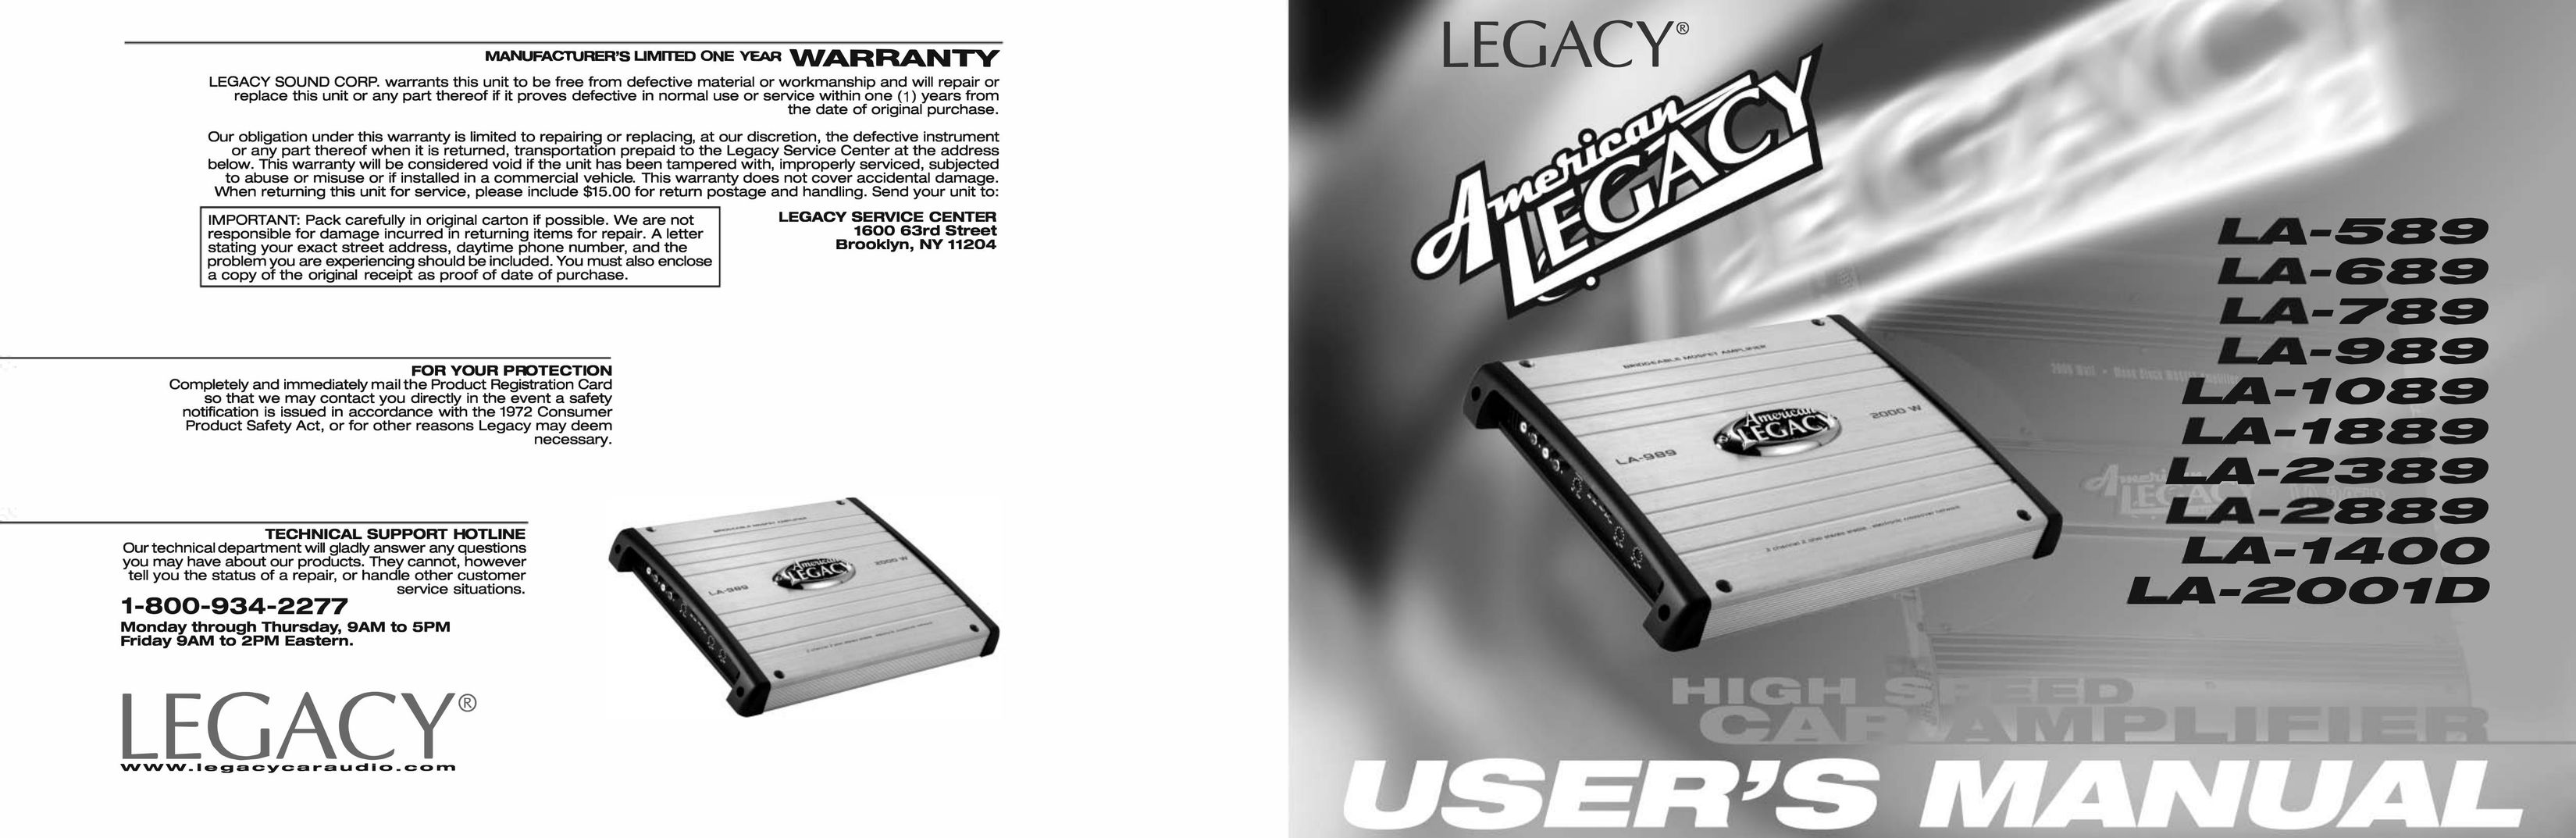 Legacy Car Audio LA-1889 Car Amplifier User Manual